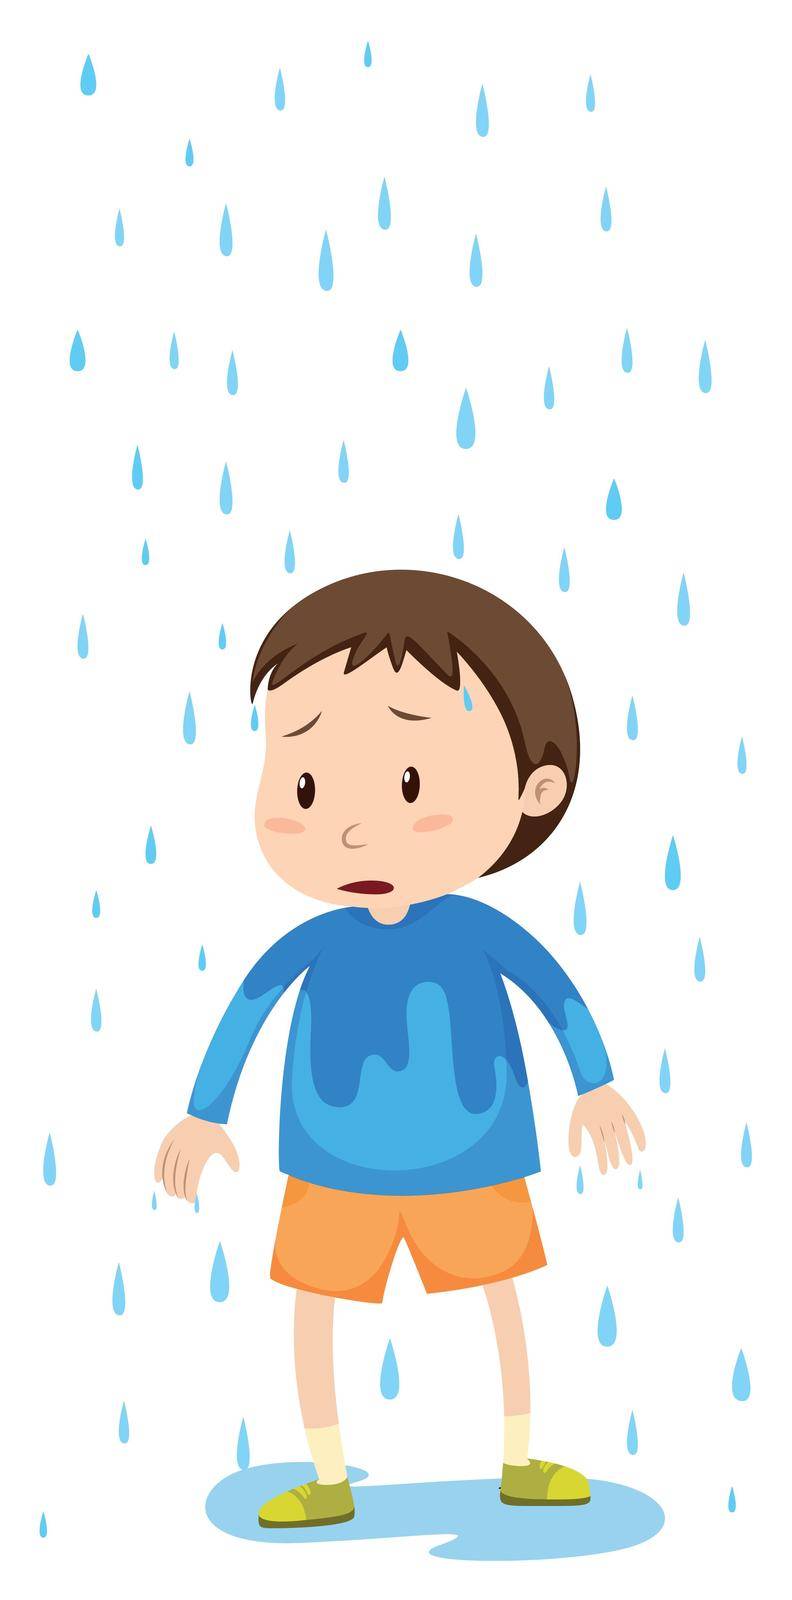 Boy standing in the rain by iimages